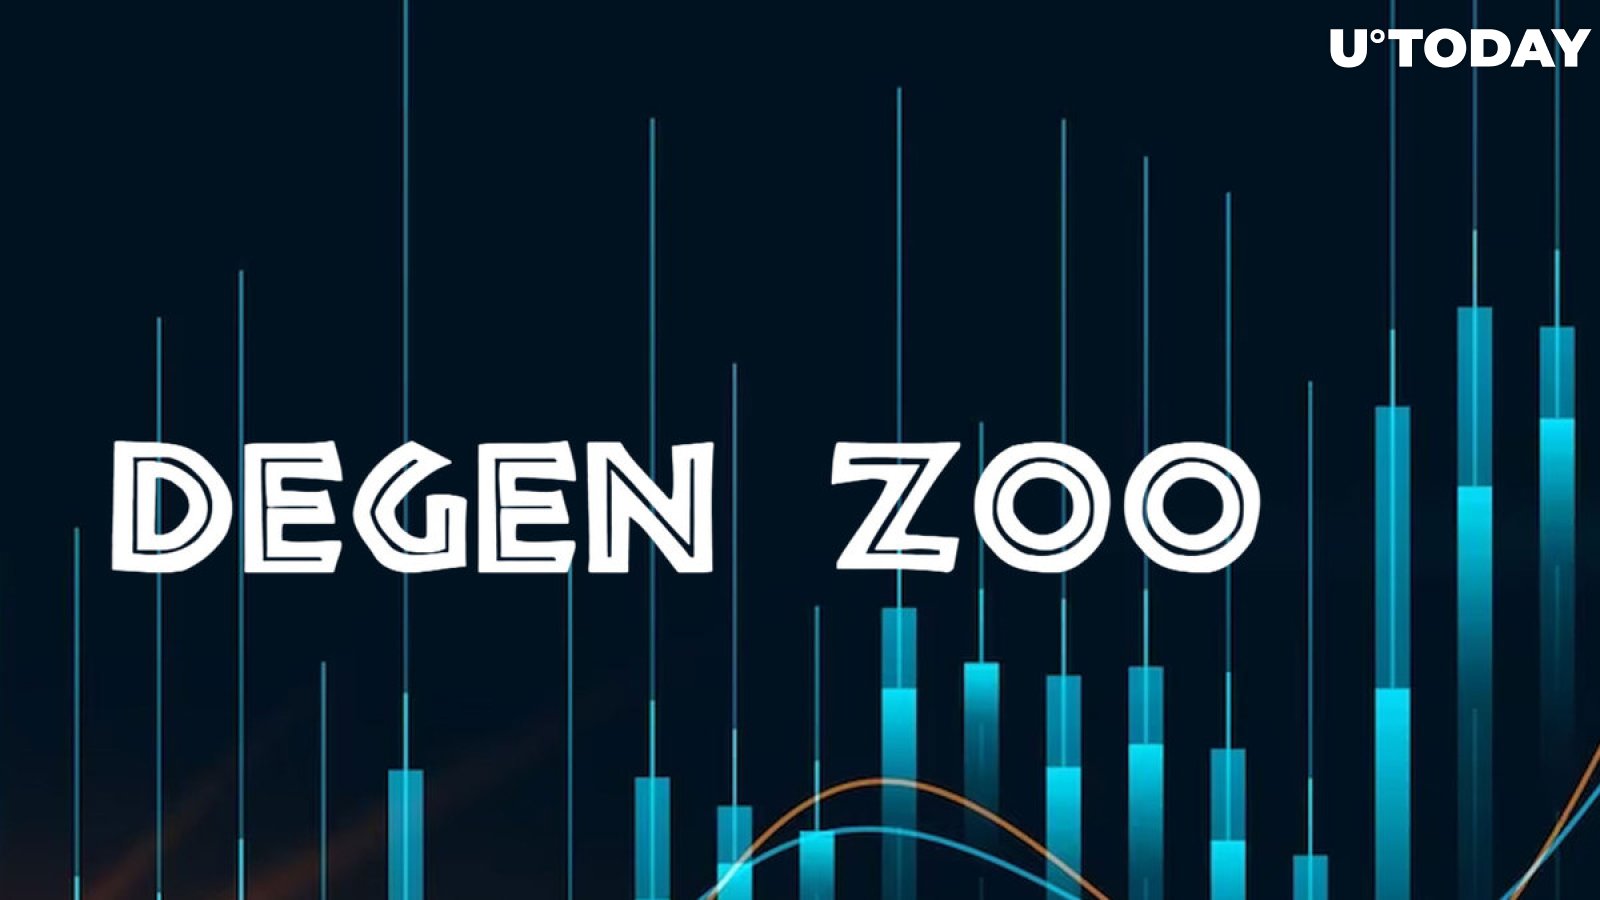 Degen Zoo Developed Single-Handedly Gathers $700 Million, Setting New Record